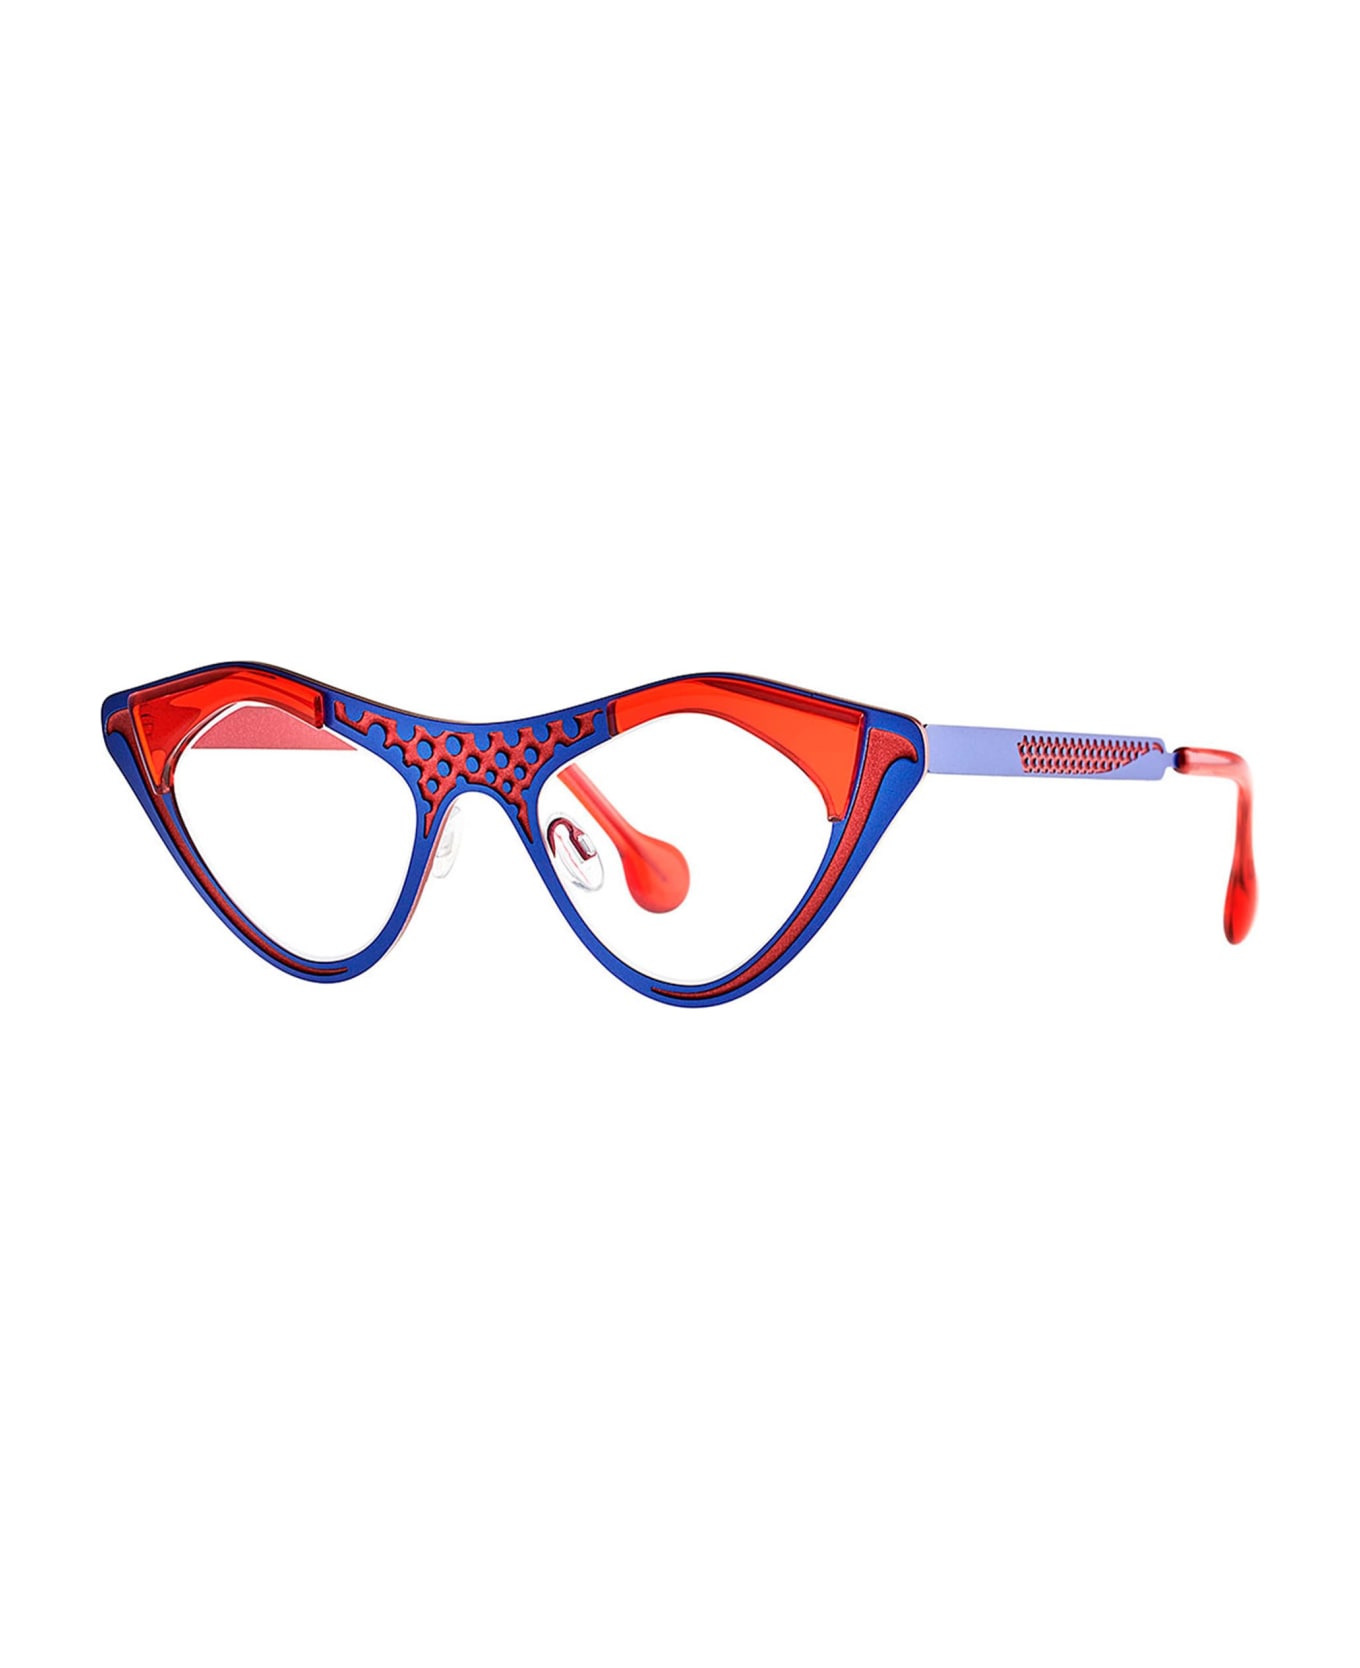 Theo Eyewear Liz - Transparent Coral Rx Glasses - red